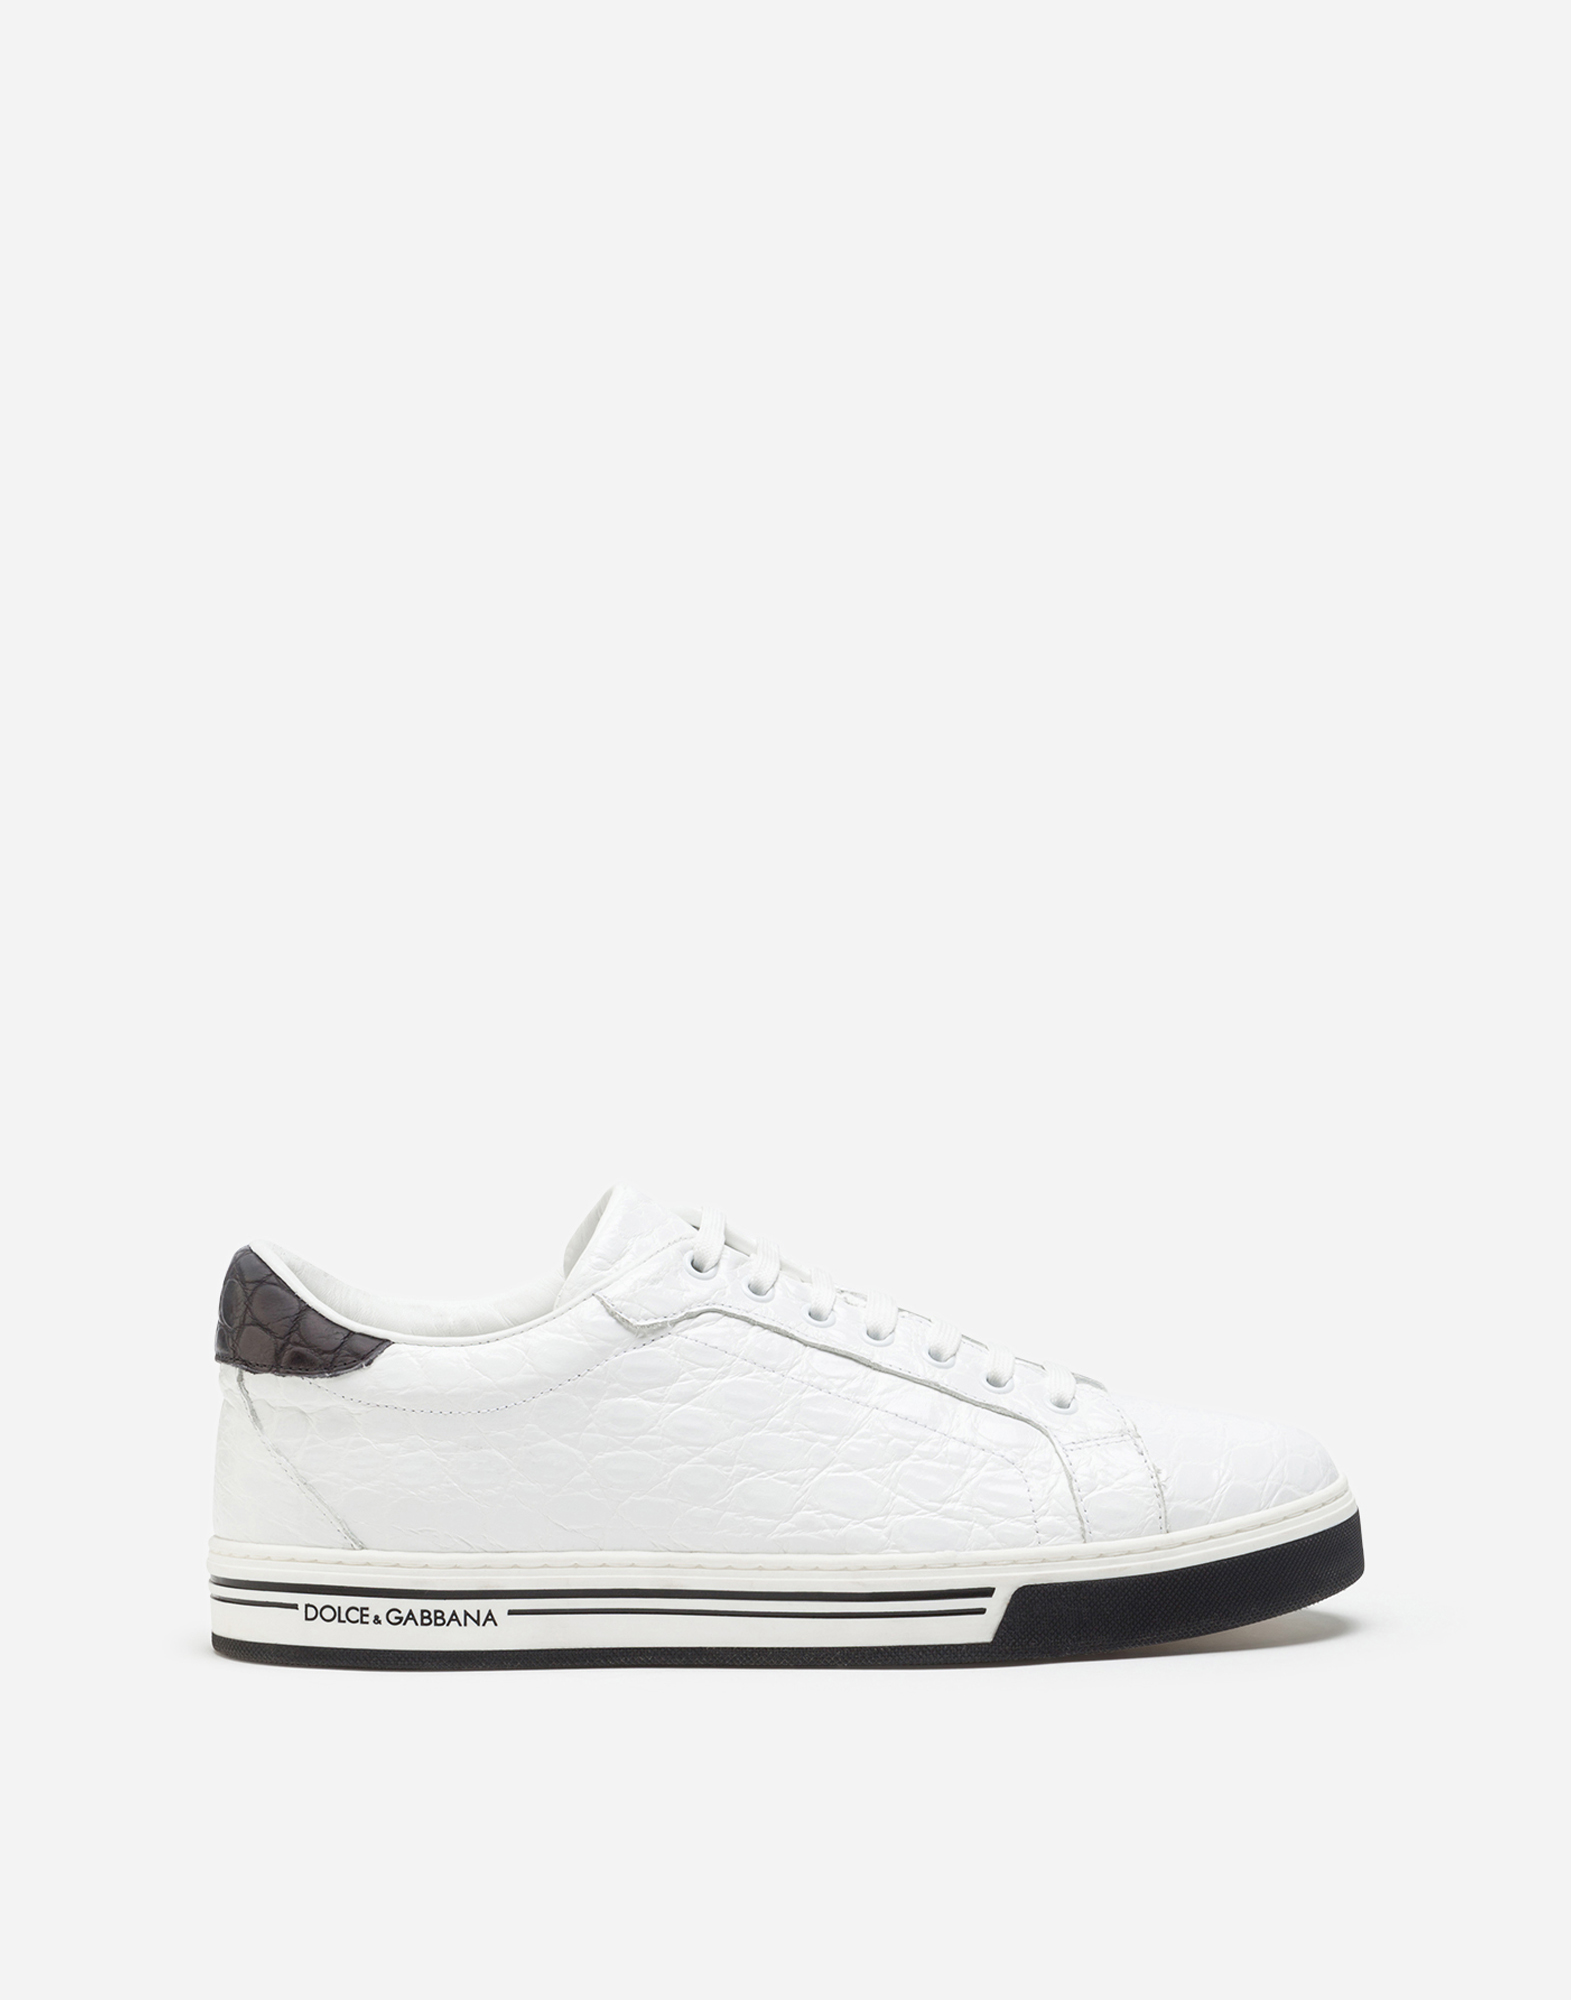 Hand-polished crocodile skin side Roma sneakers in White/Black